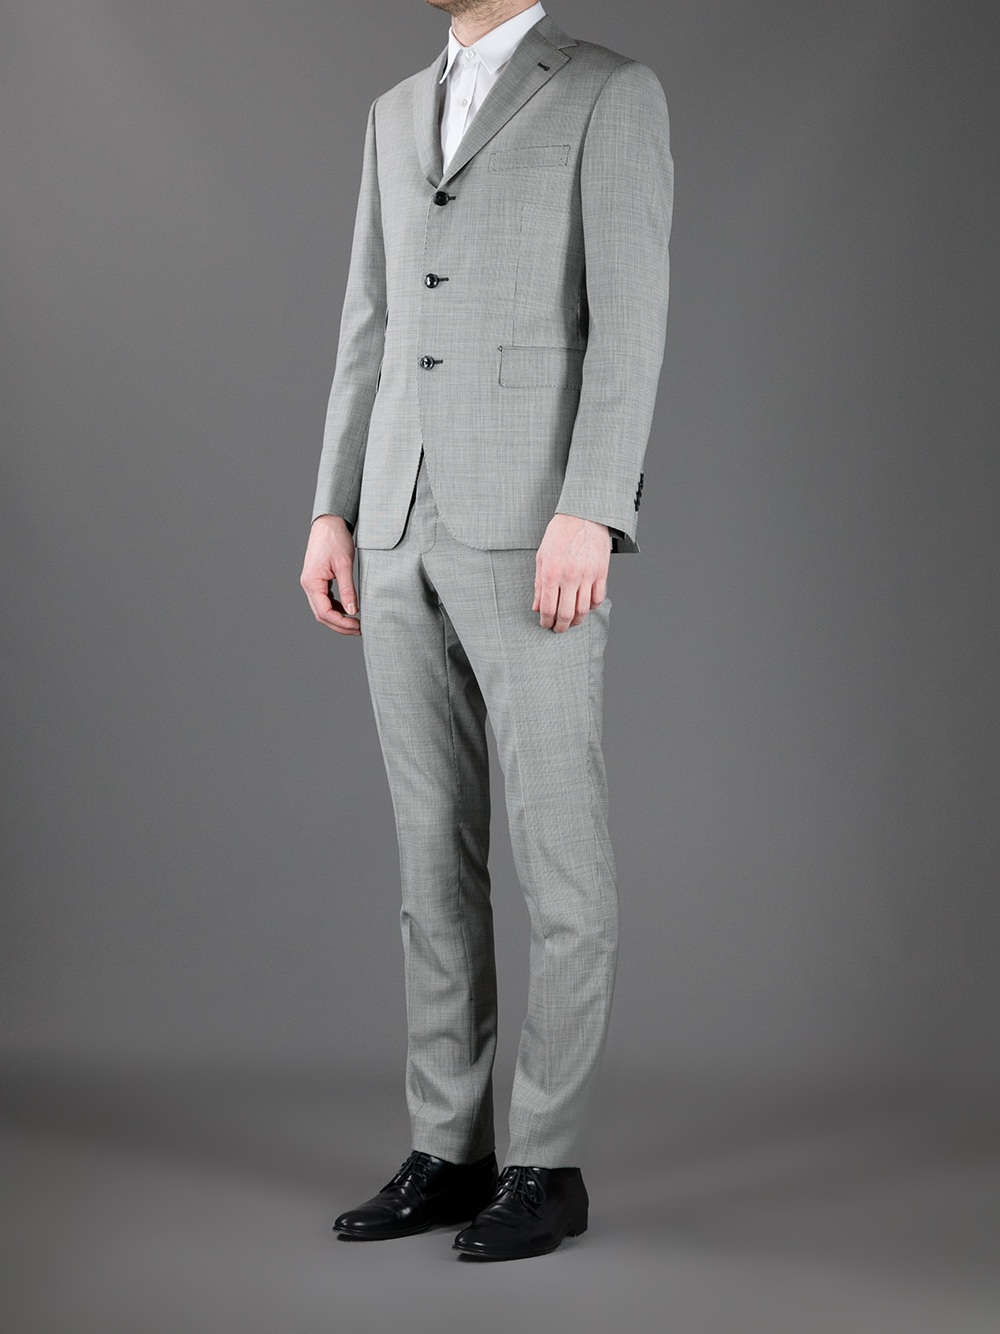 Lyst - Tagliatore Twopiece Suit in Gray for Men